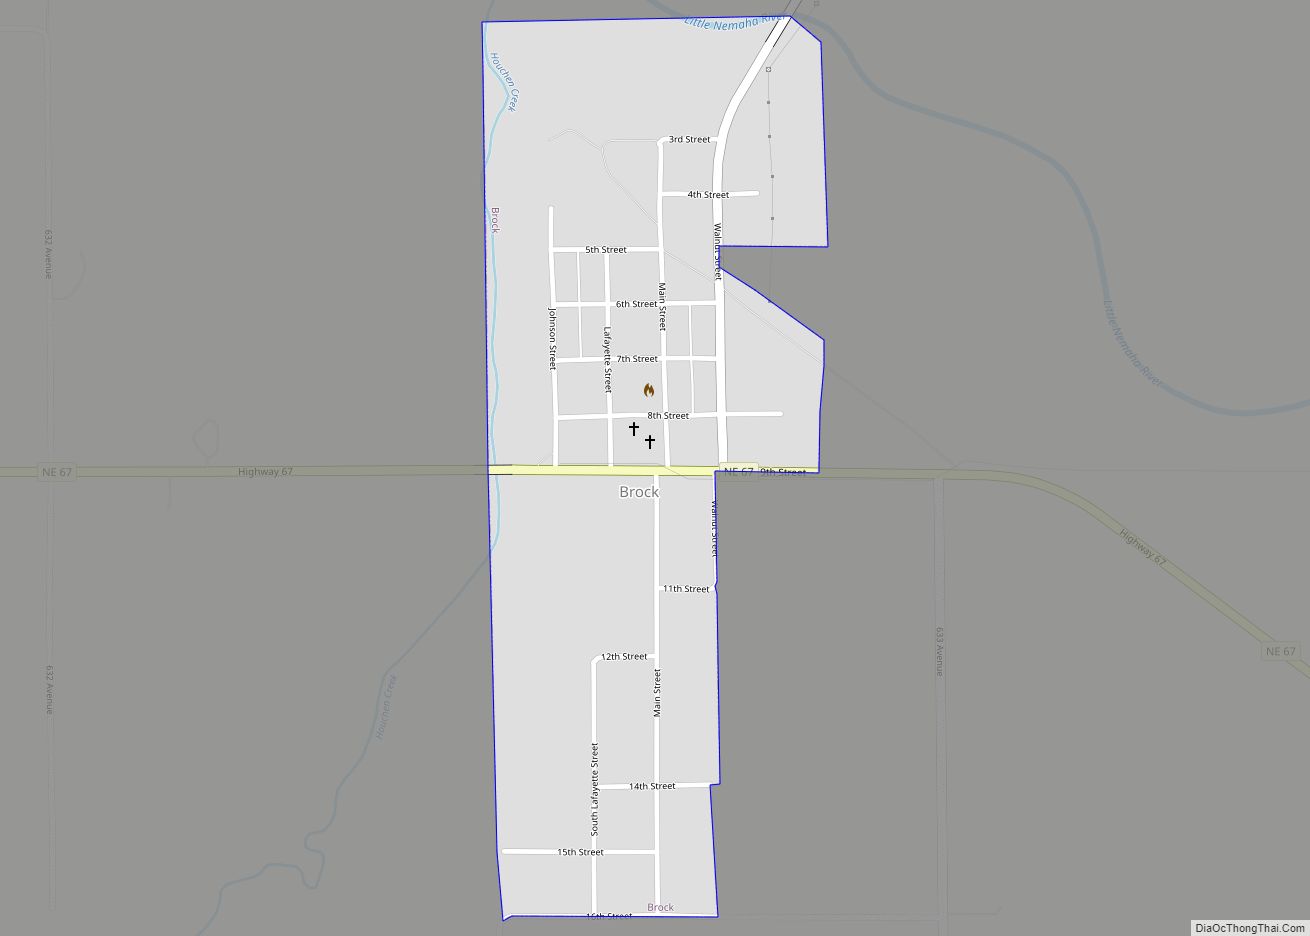 Map of Brock village